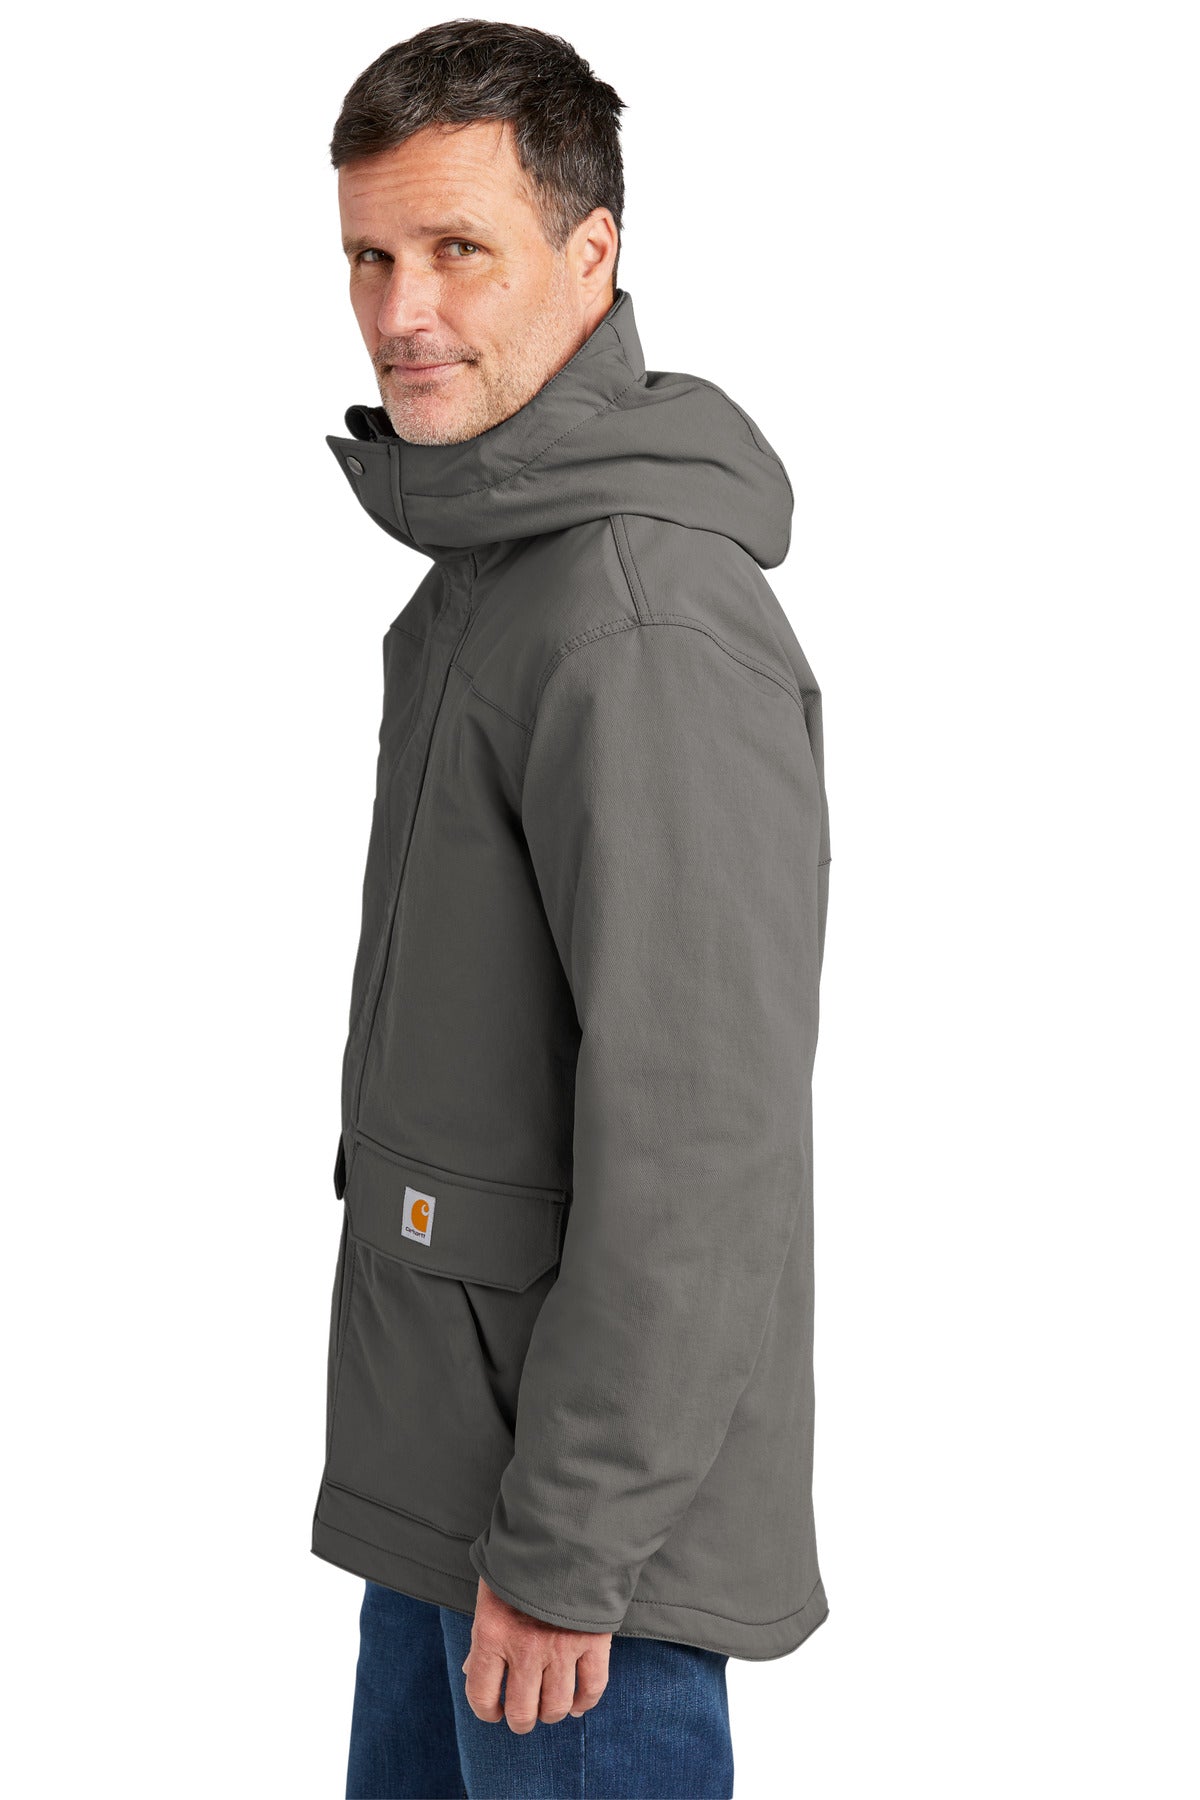 Carhartt Super Dux Insulated Hooded Coat CT105533